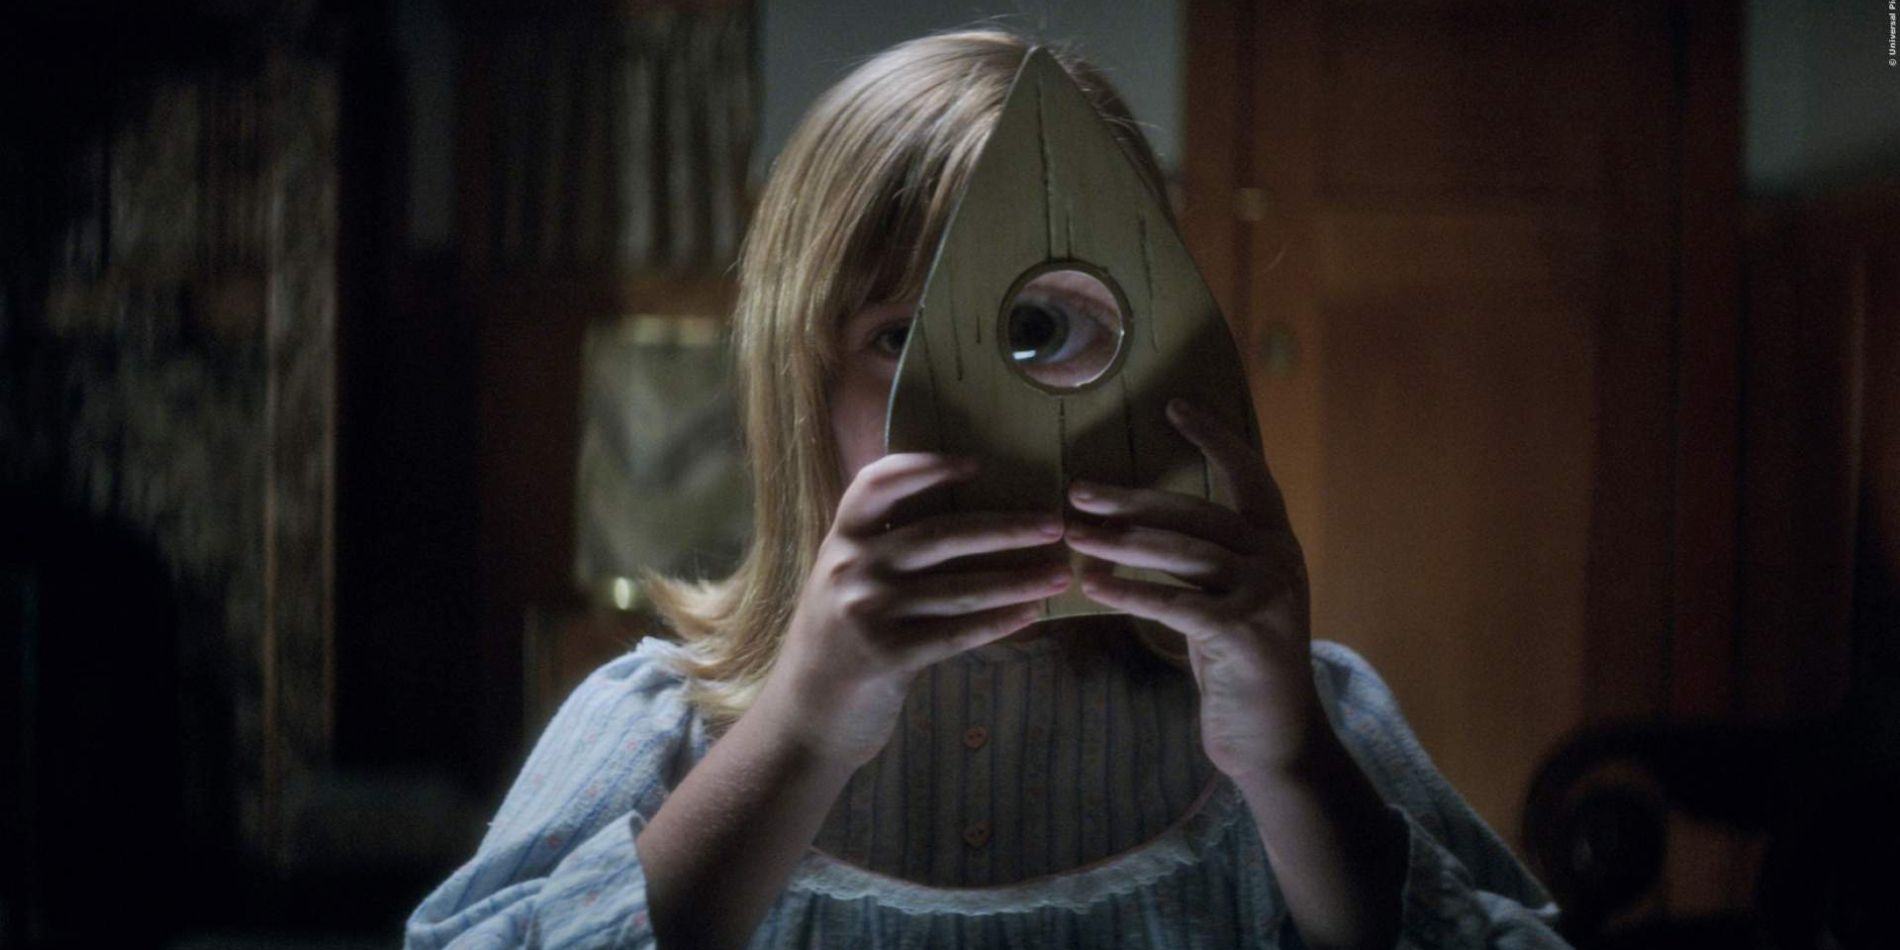 A girl looking through the Ouija board in Ouija: Origins of Evil